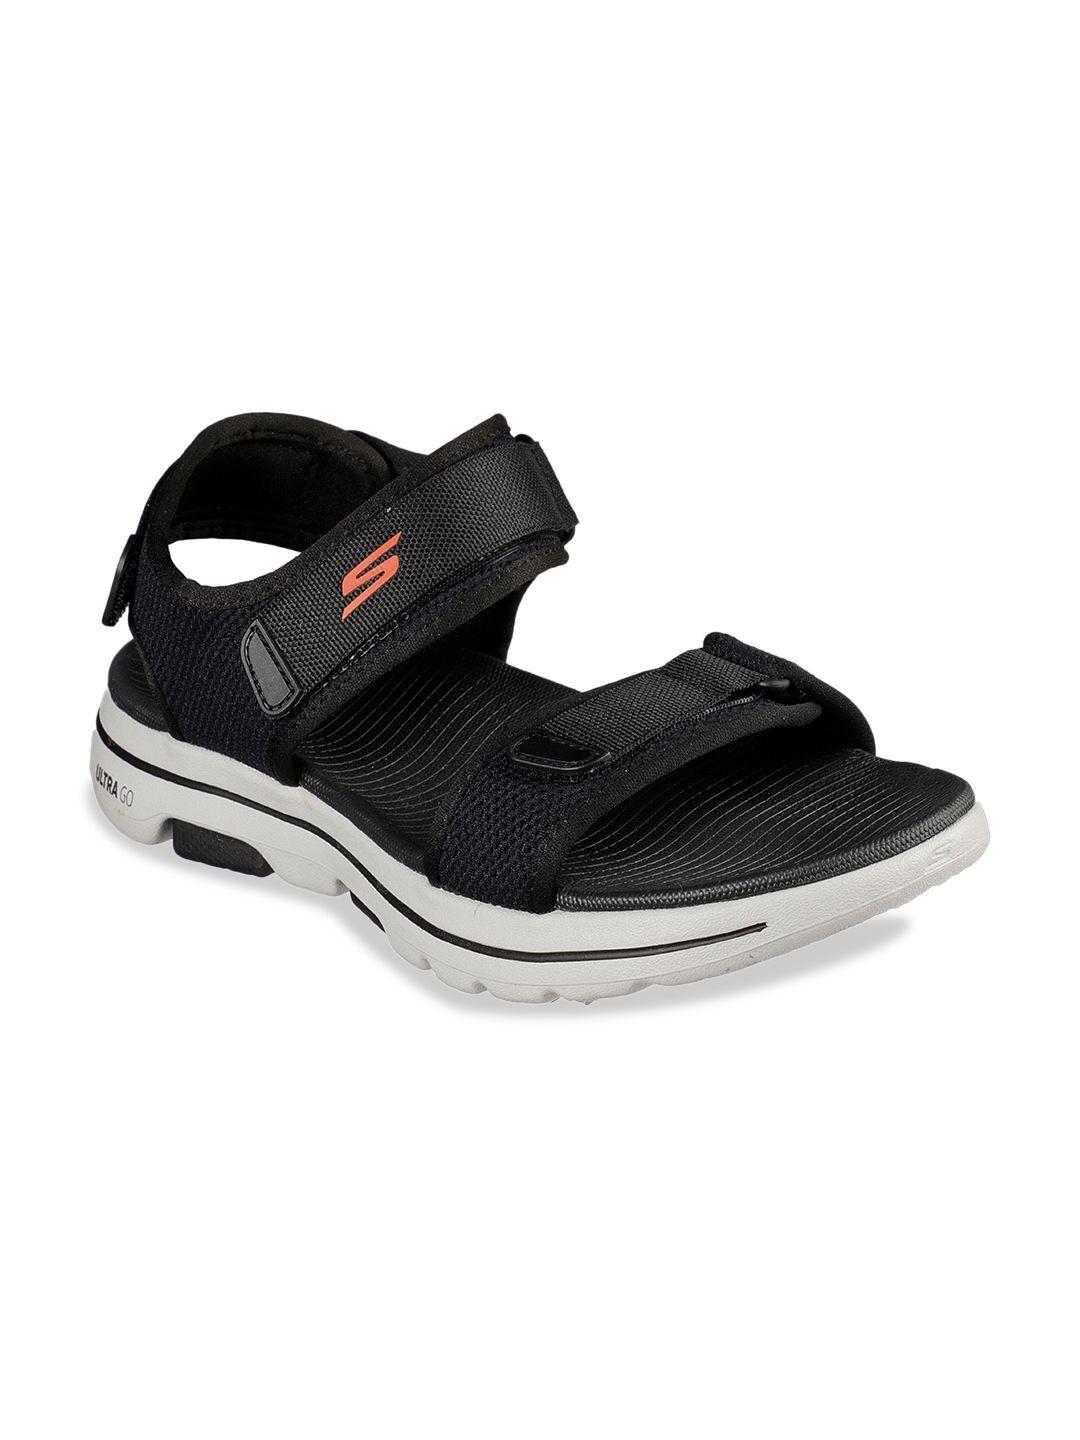 skechers-men-black-sports-sandal